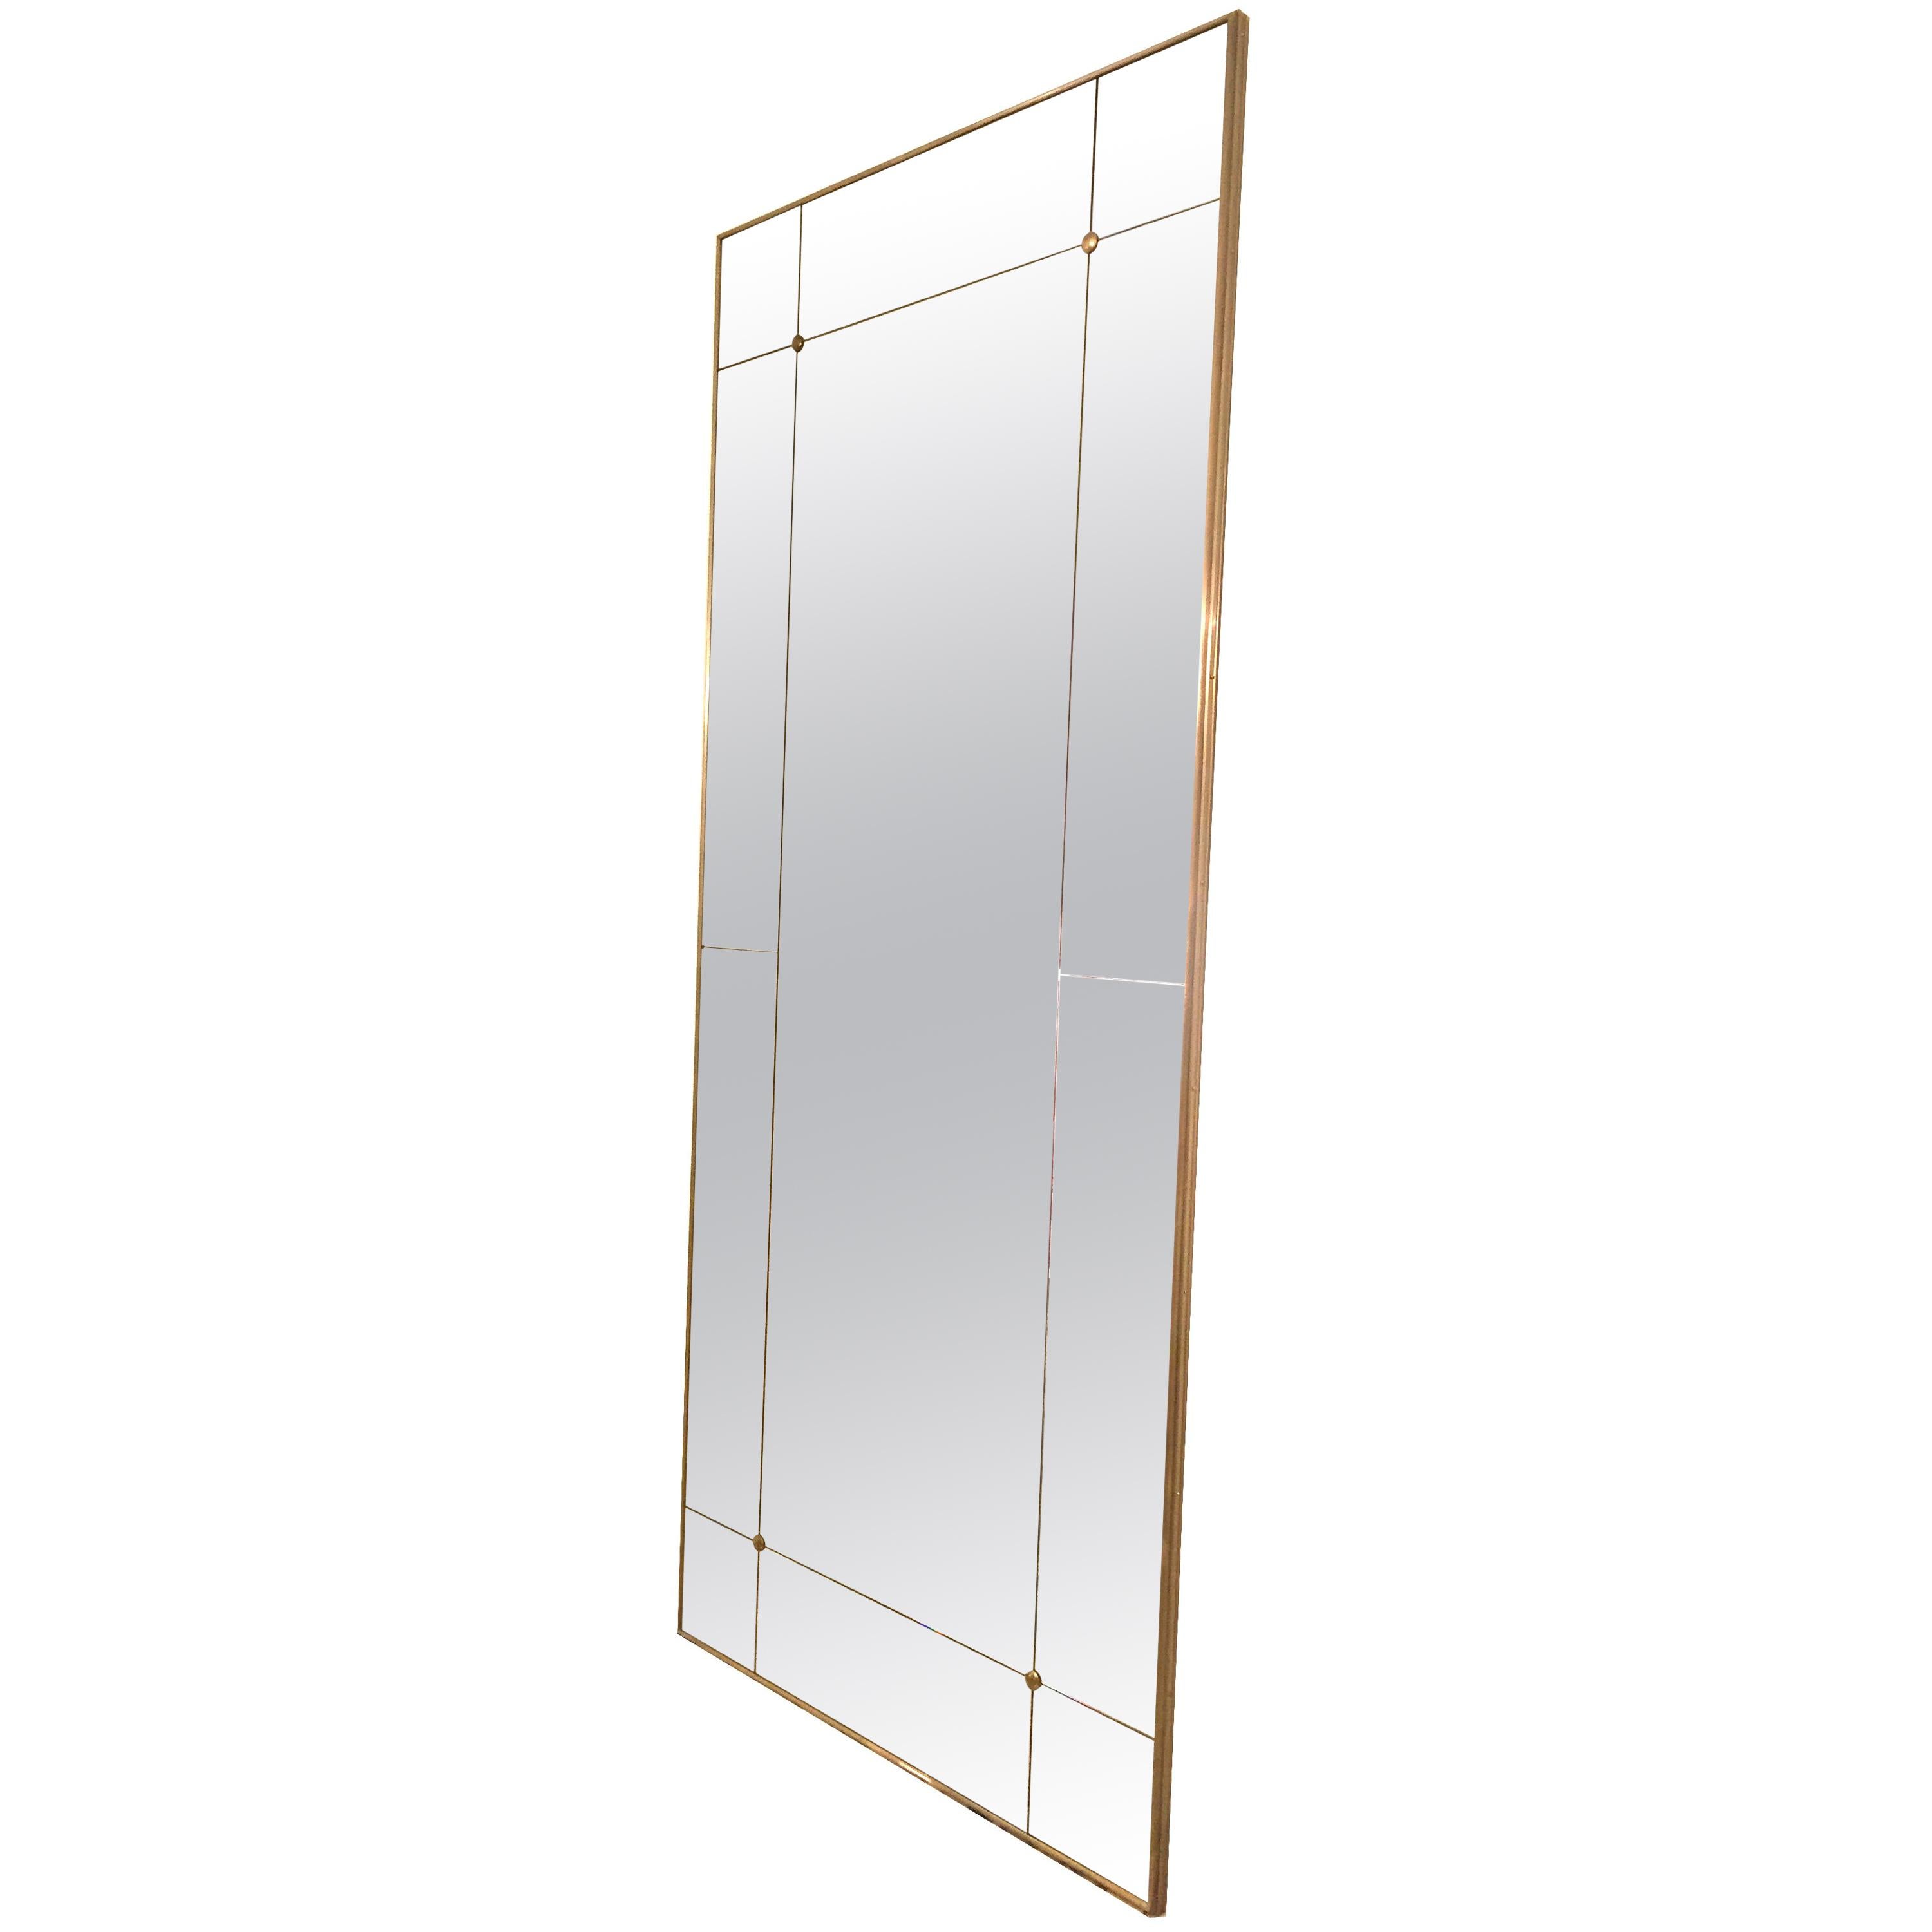 Pescetta Contemporary Art Deco Style Floor Paneled Mirror Brass Frame